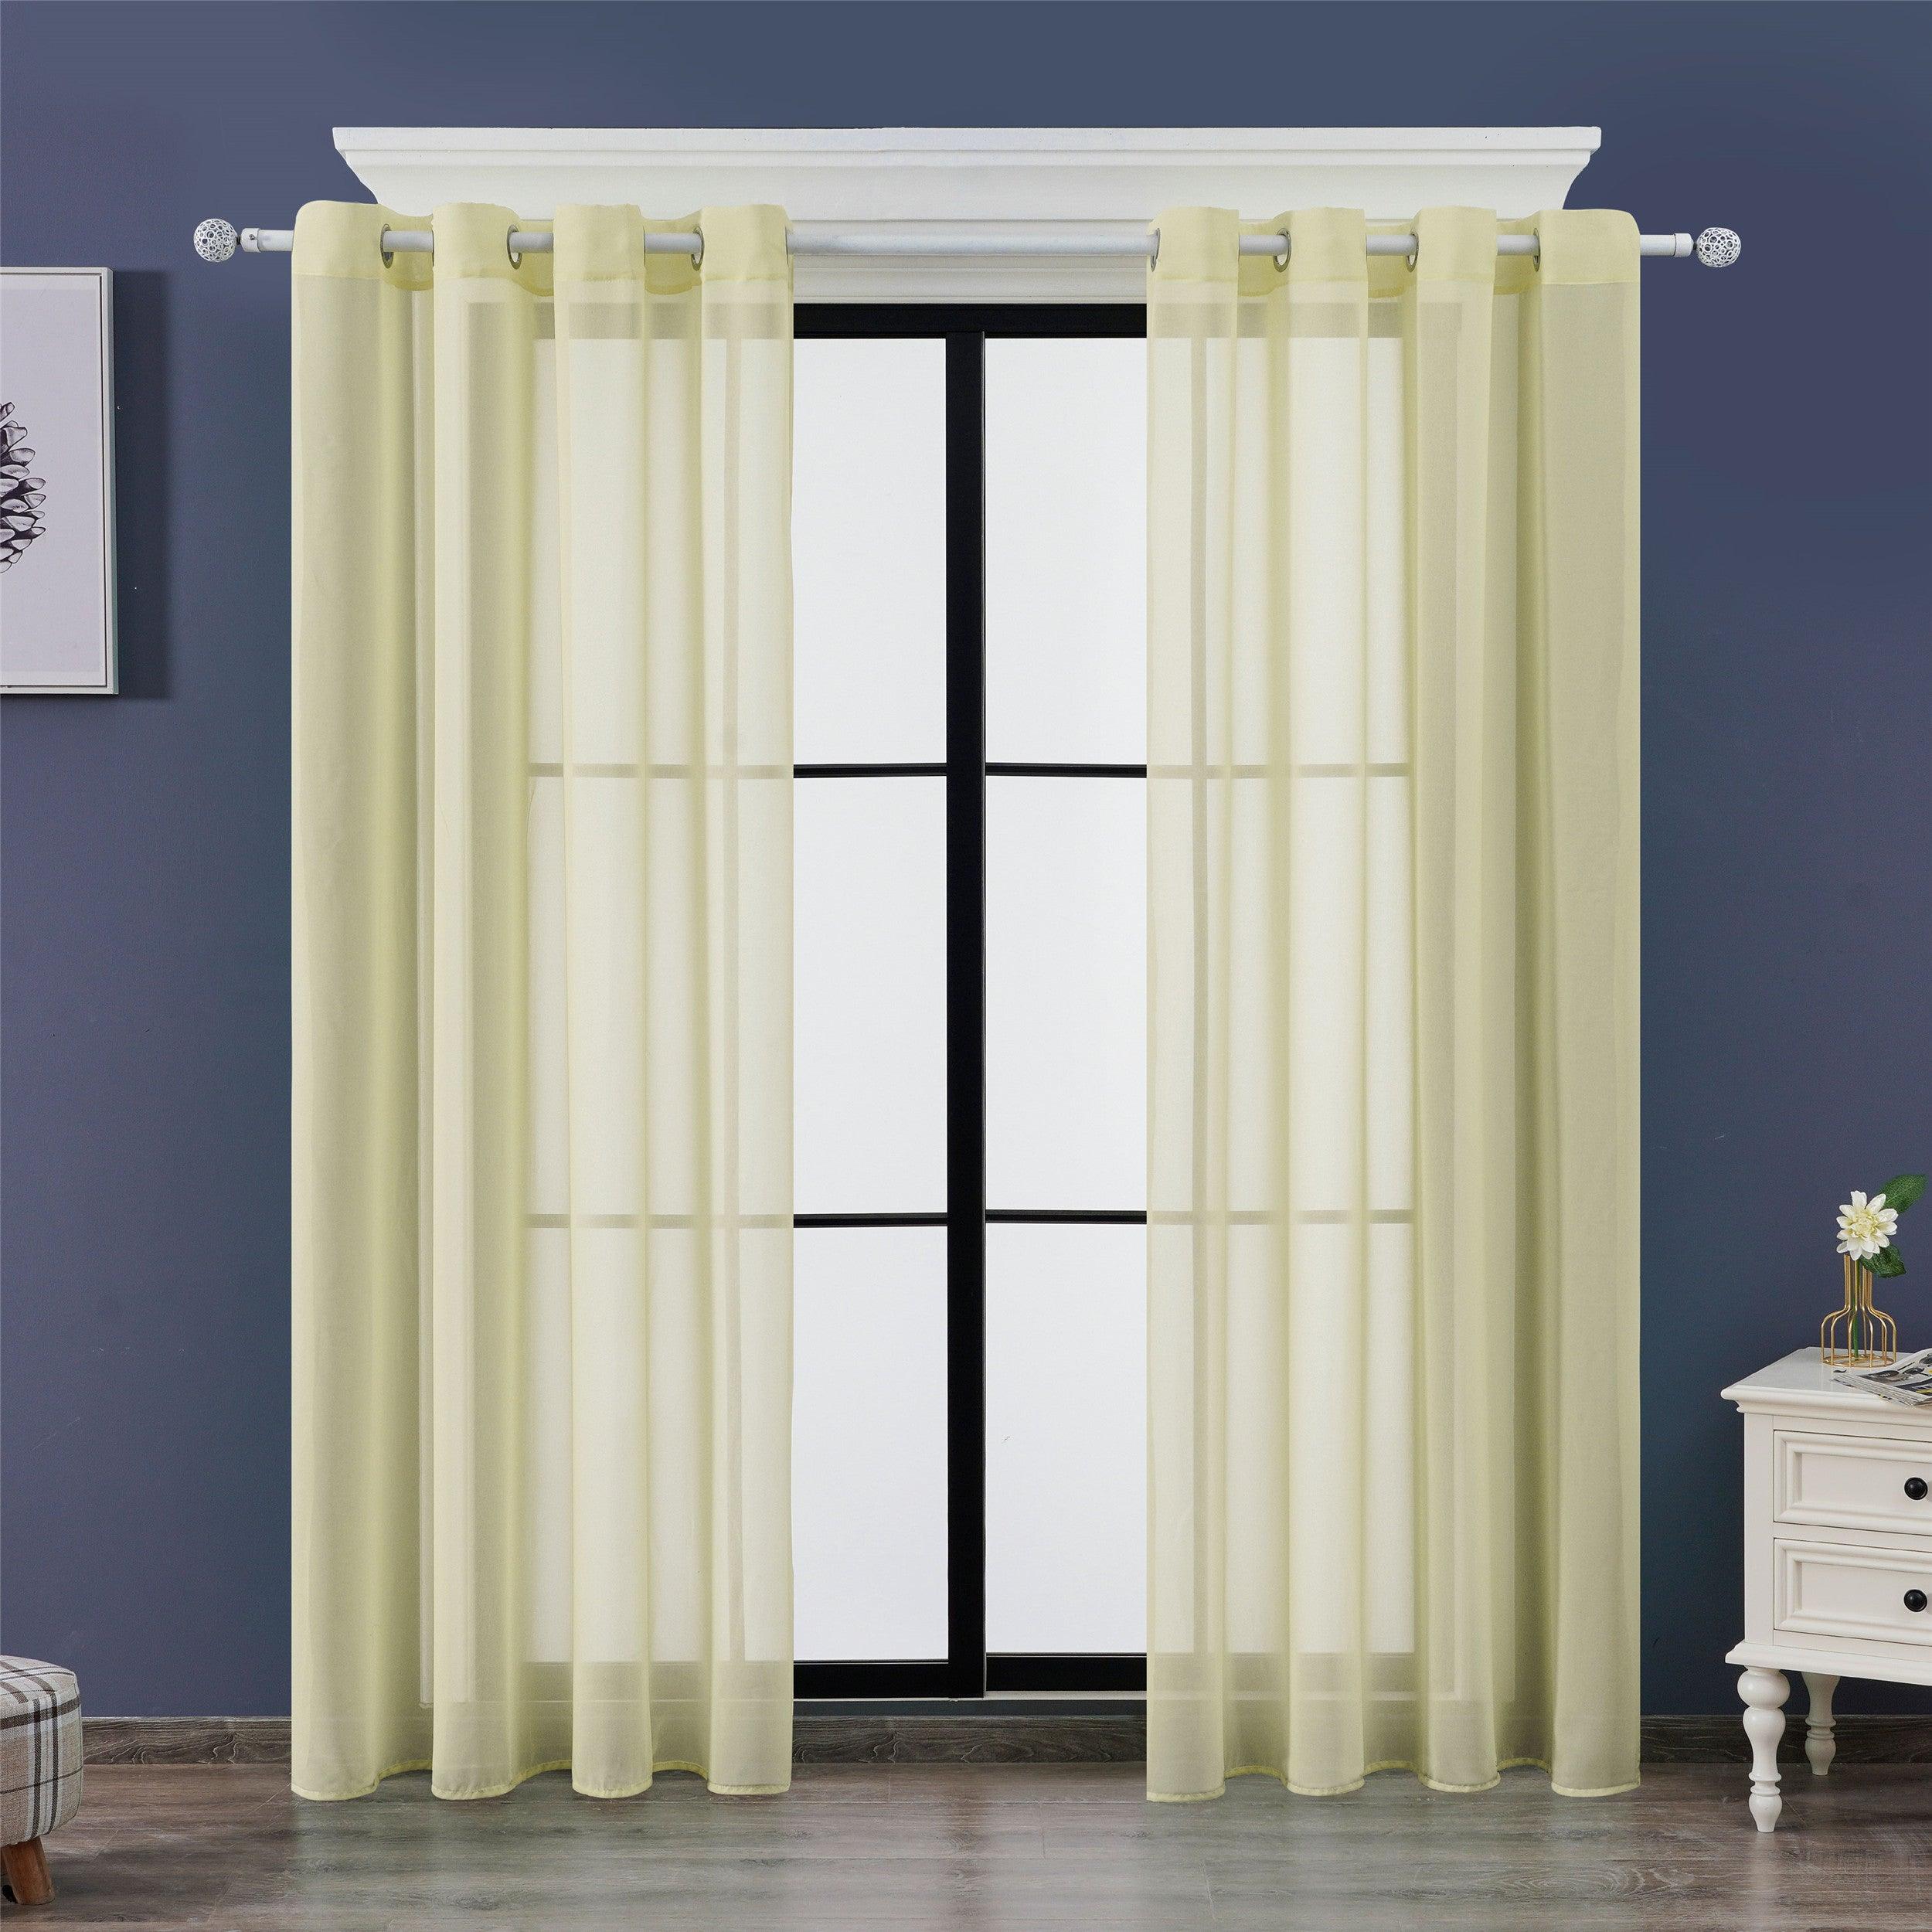 White Curtain Design -Chiffon White Sheer Kitchen Curtains Grommet Window Drapes,1 Panel - Topfinel